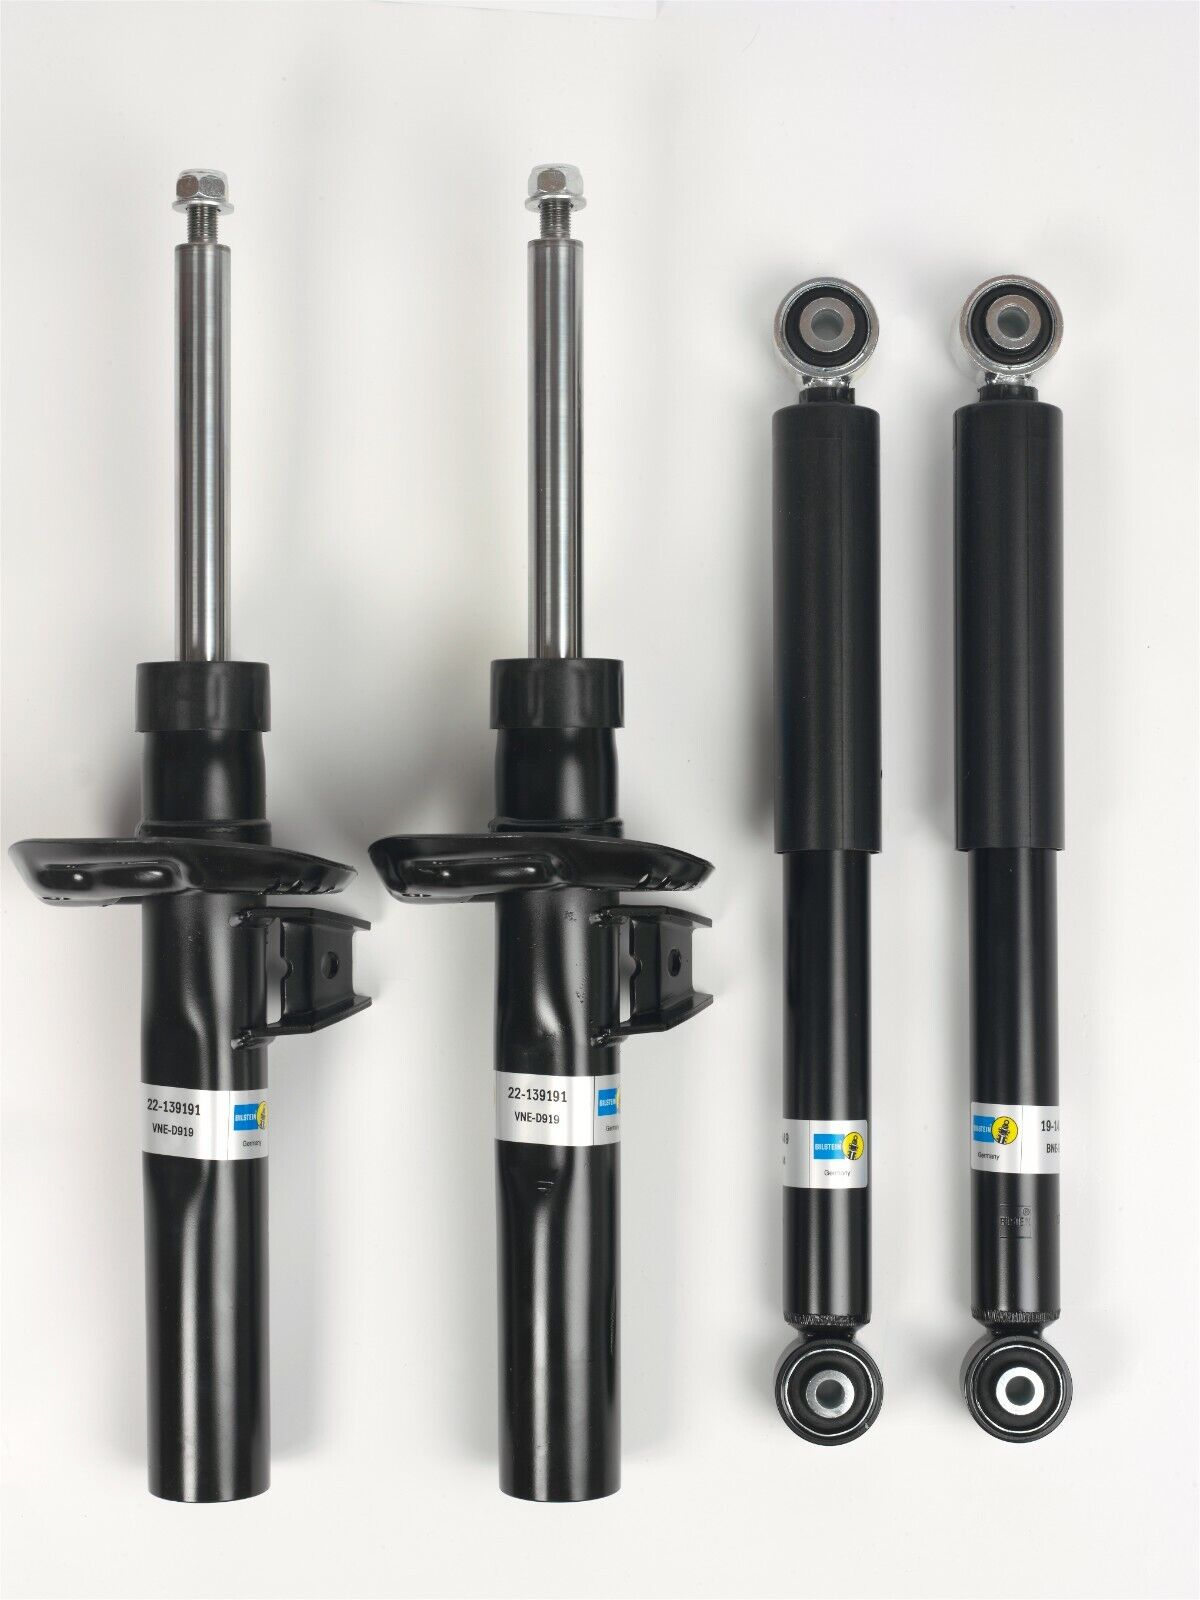 Bilstein 4x B4 Shock Absorbers Damper Set For Lowered for VW Caddy Mk3/4 Models 22-139191, 19-344355